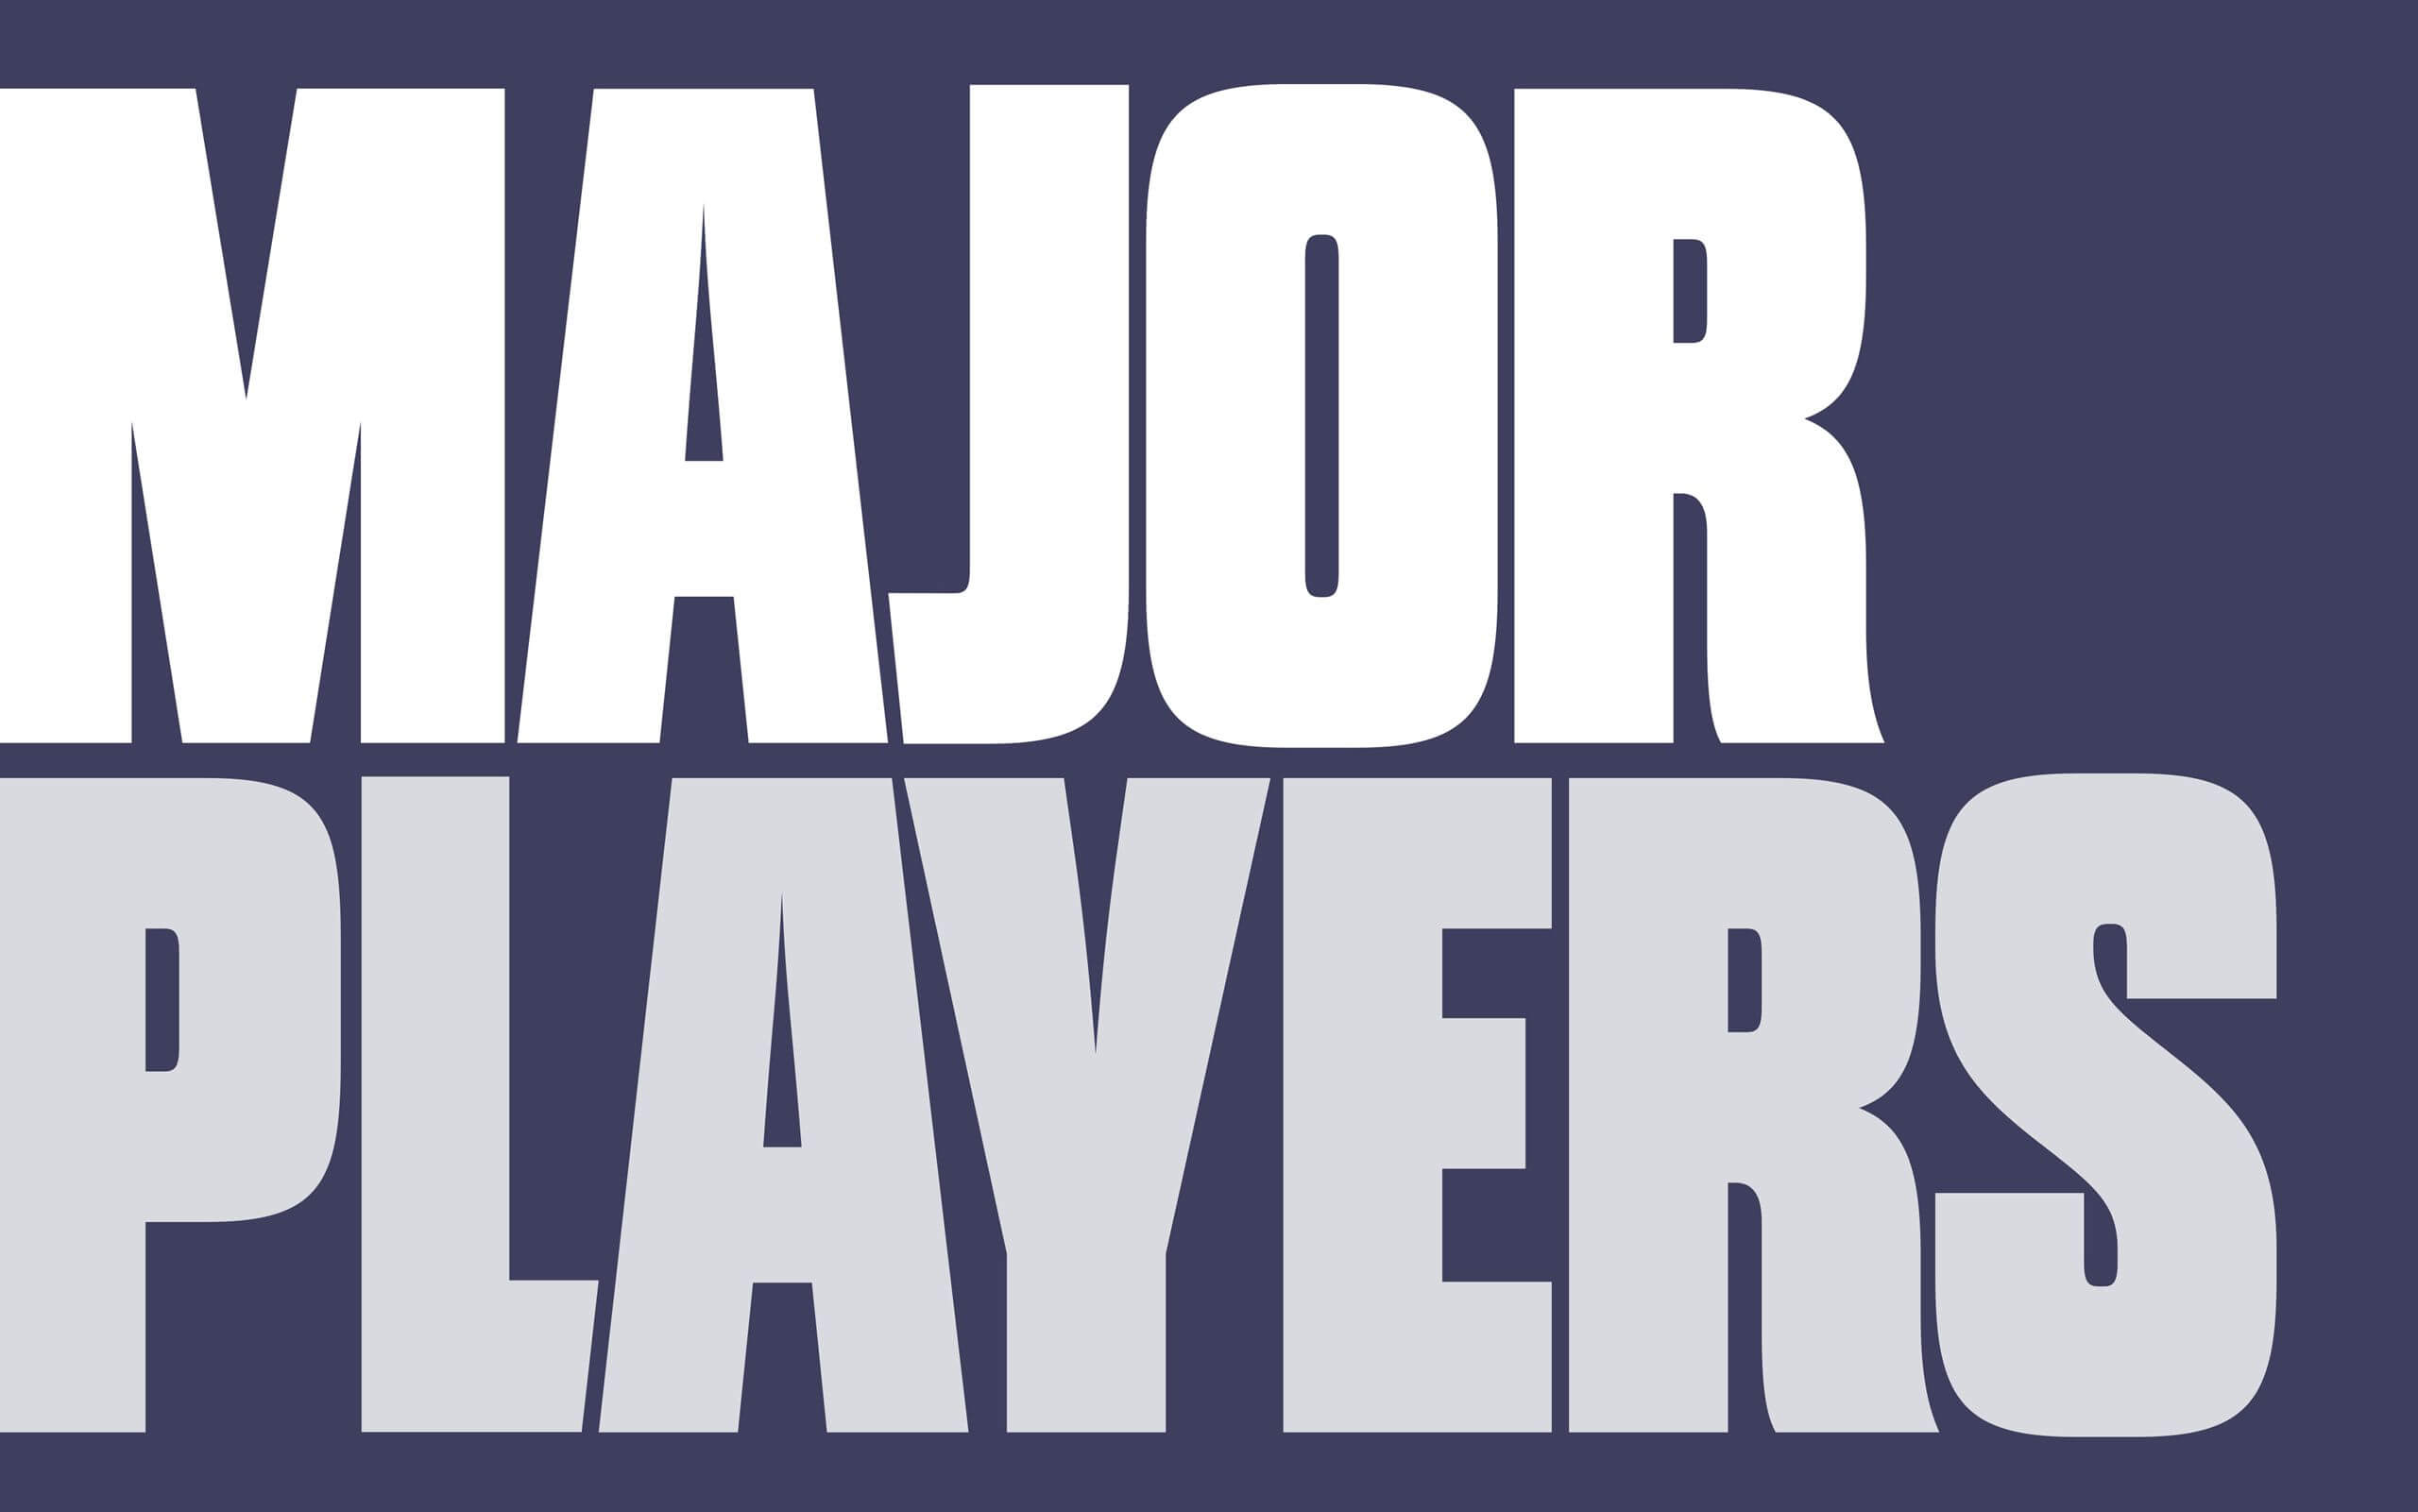 Major Players recruitment logo